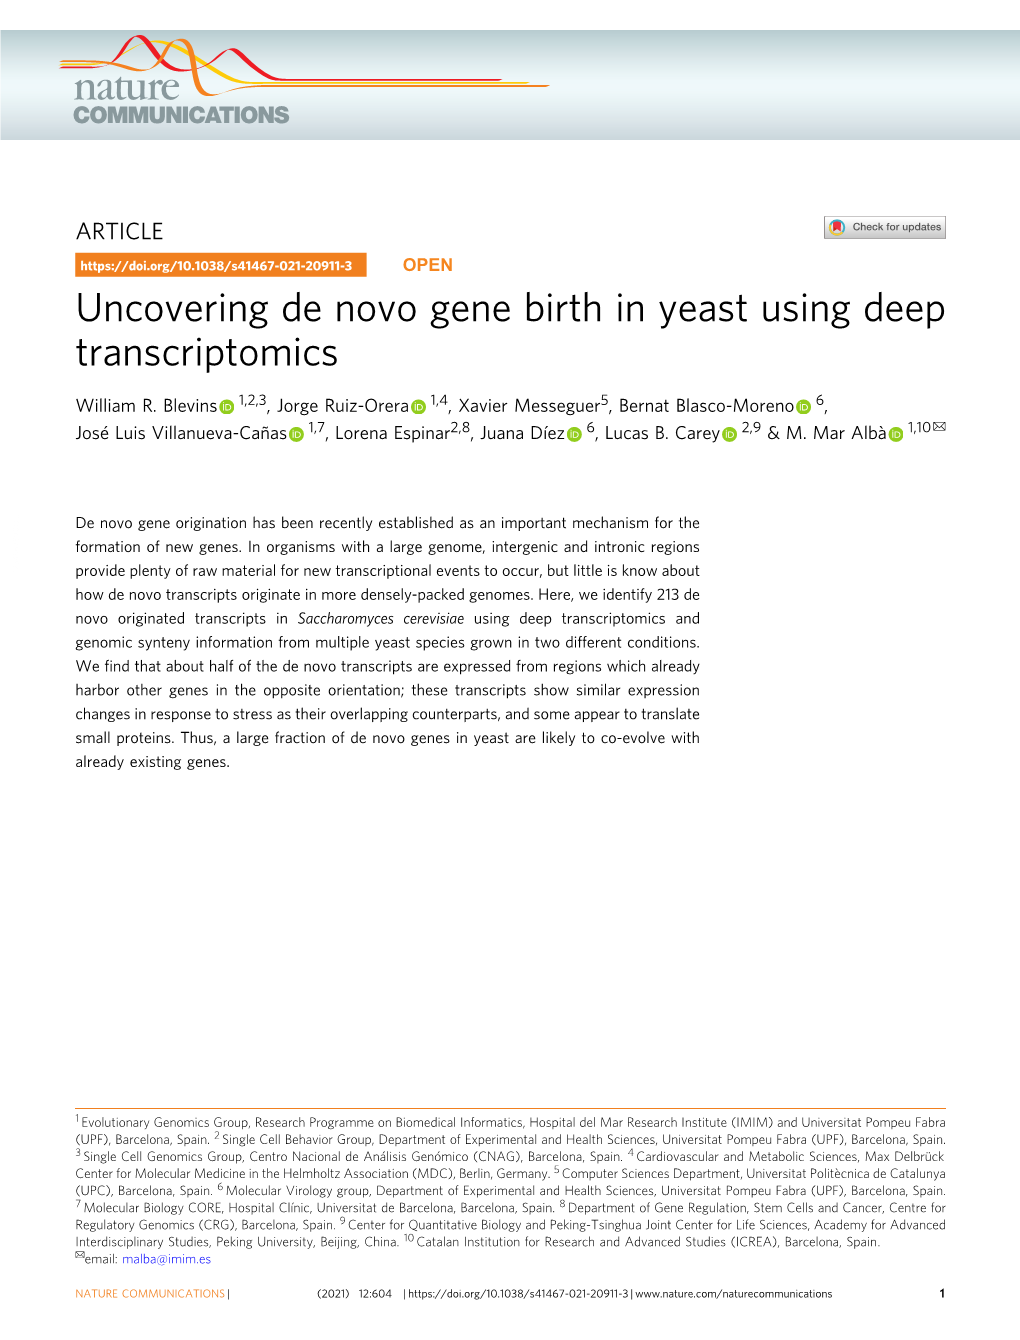 Uncovering De Novo Gene Birth in Yeast Using Deep Transcriptomics